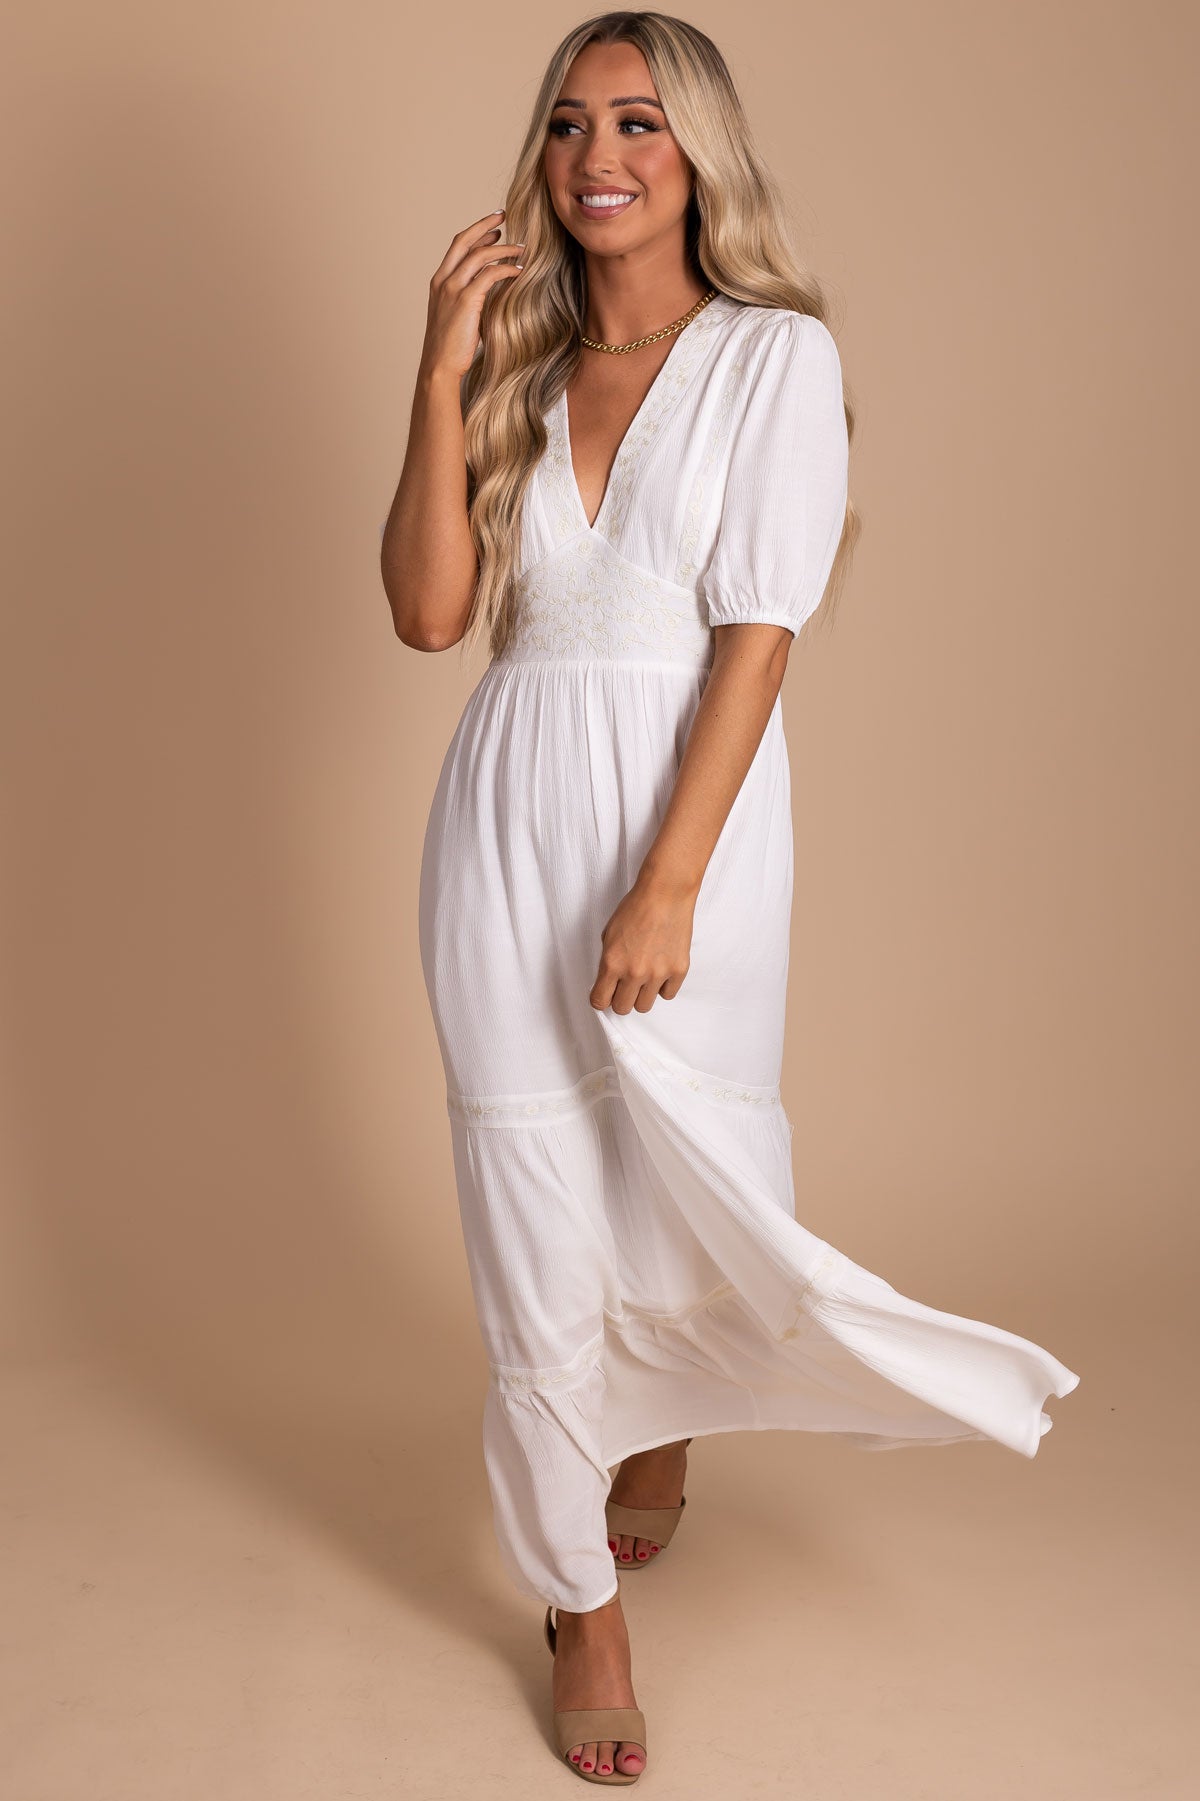 2021 White Fashion Dress for Women